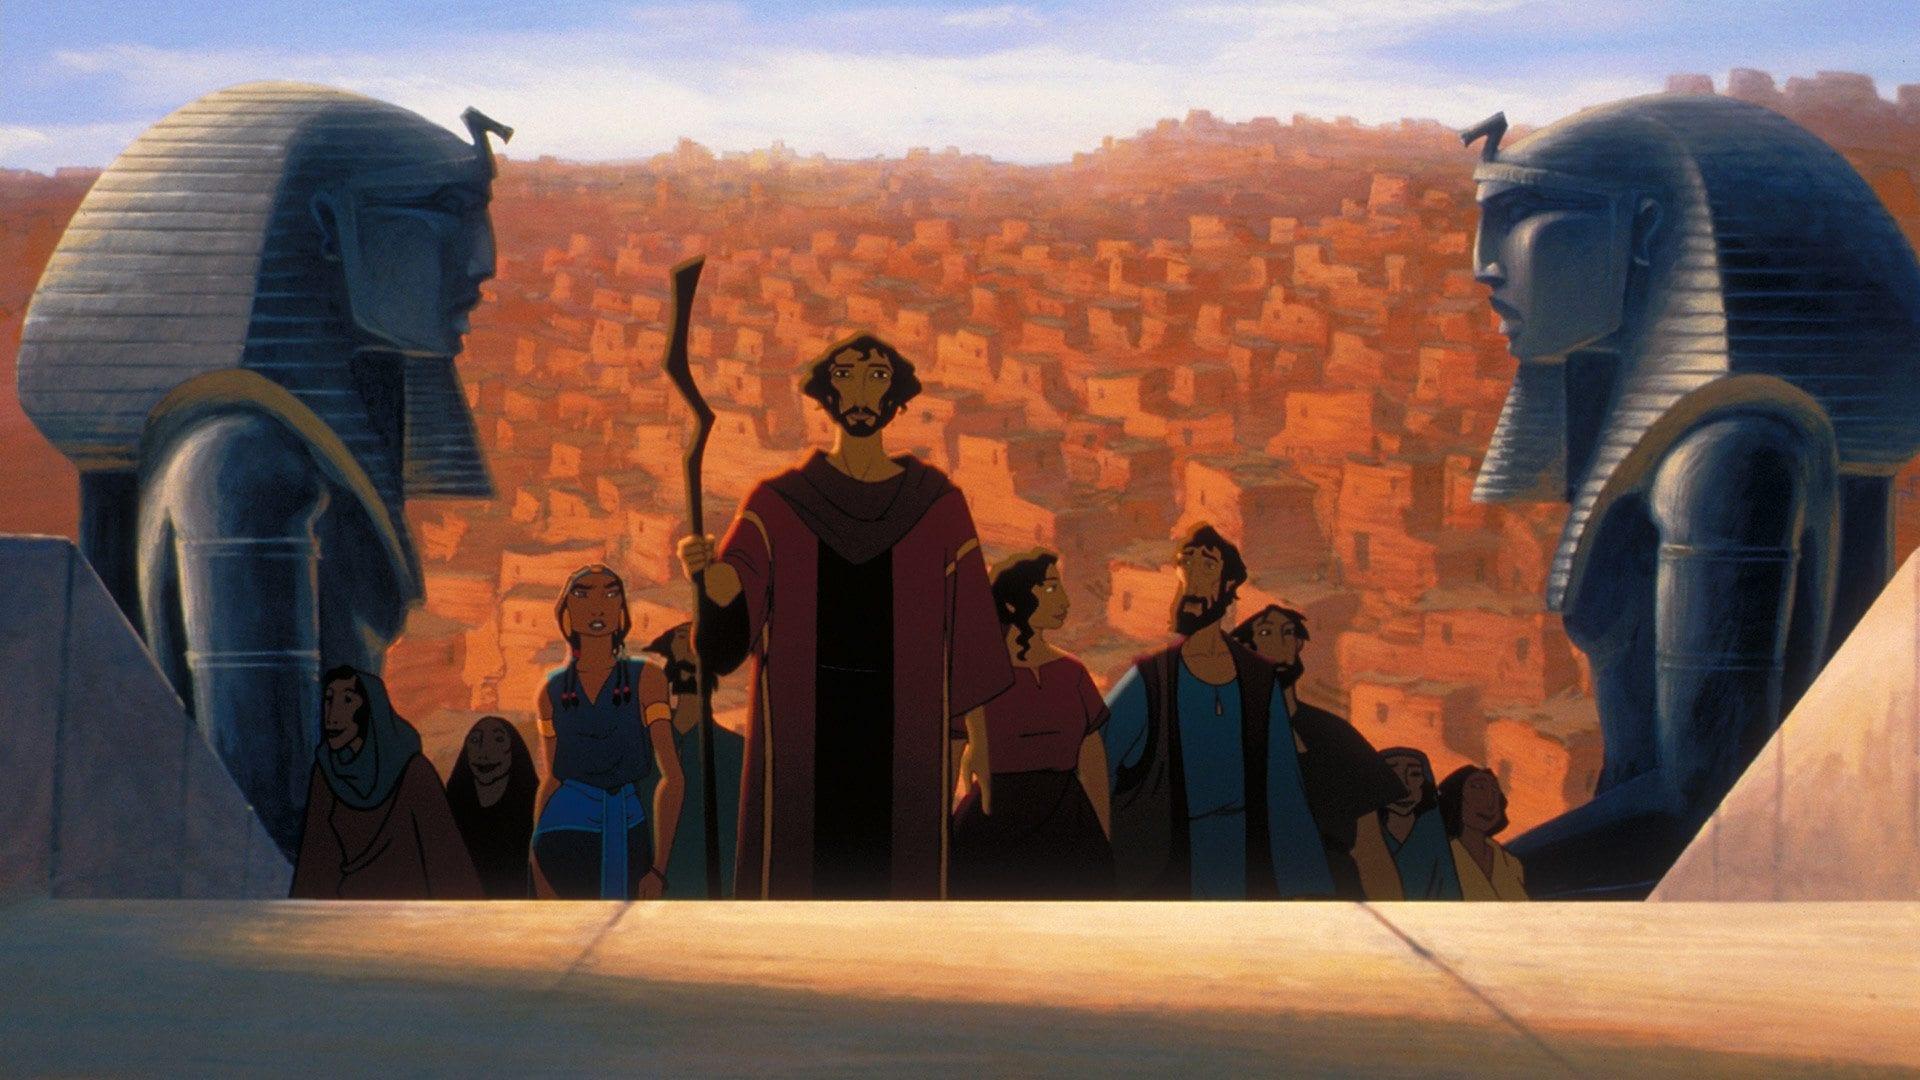 DreamWorks’ animated Torah